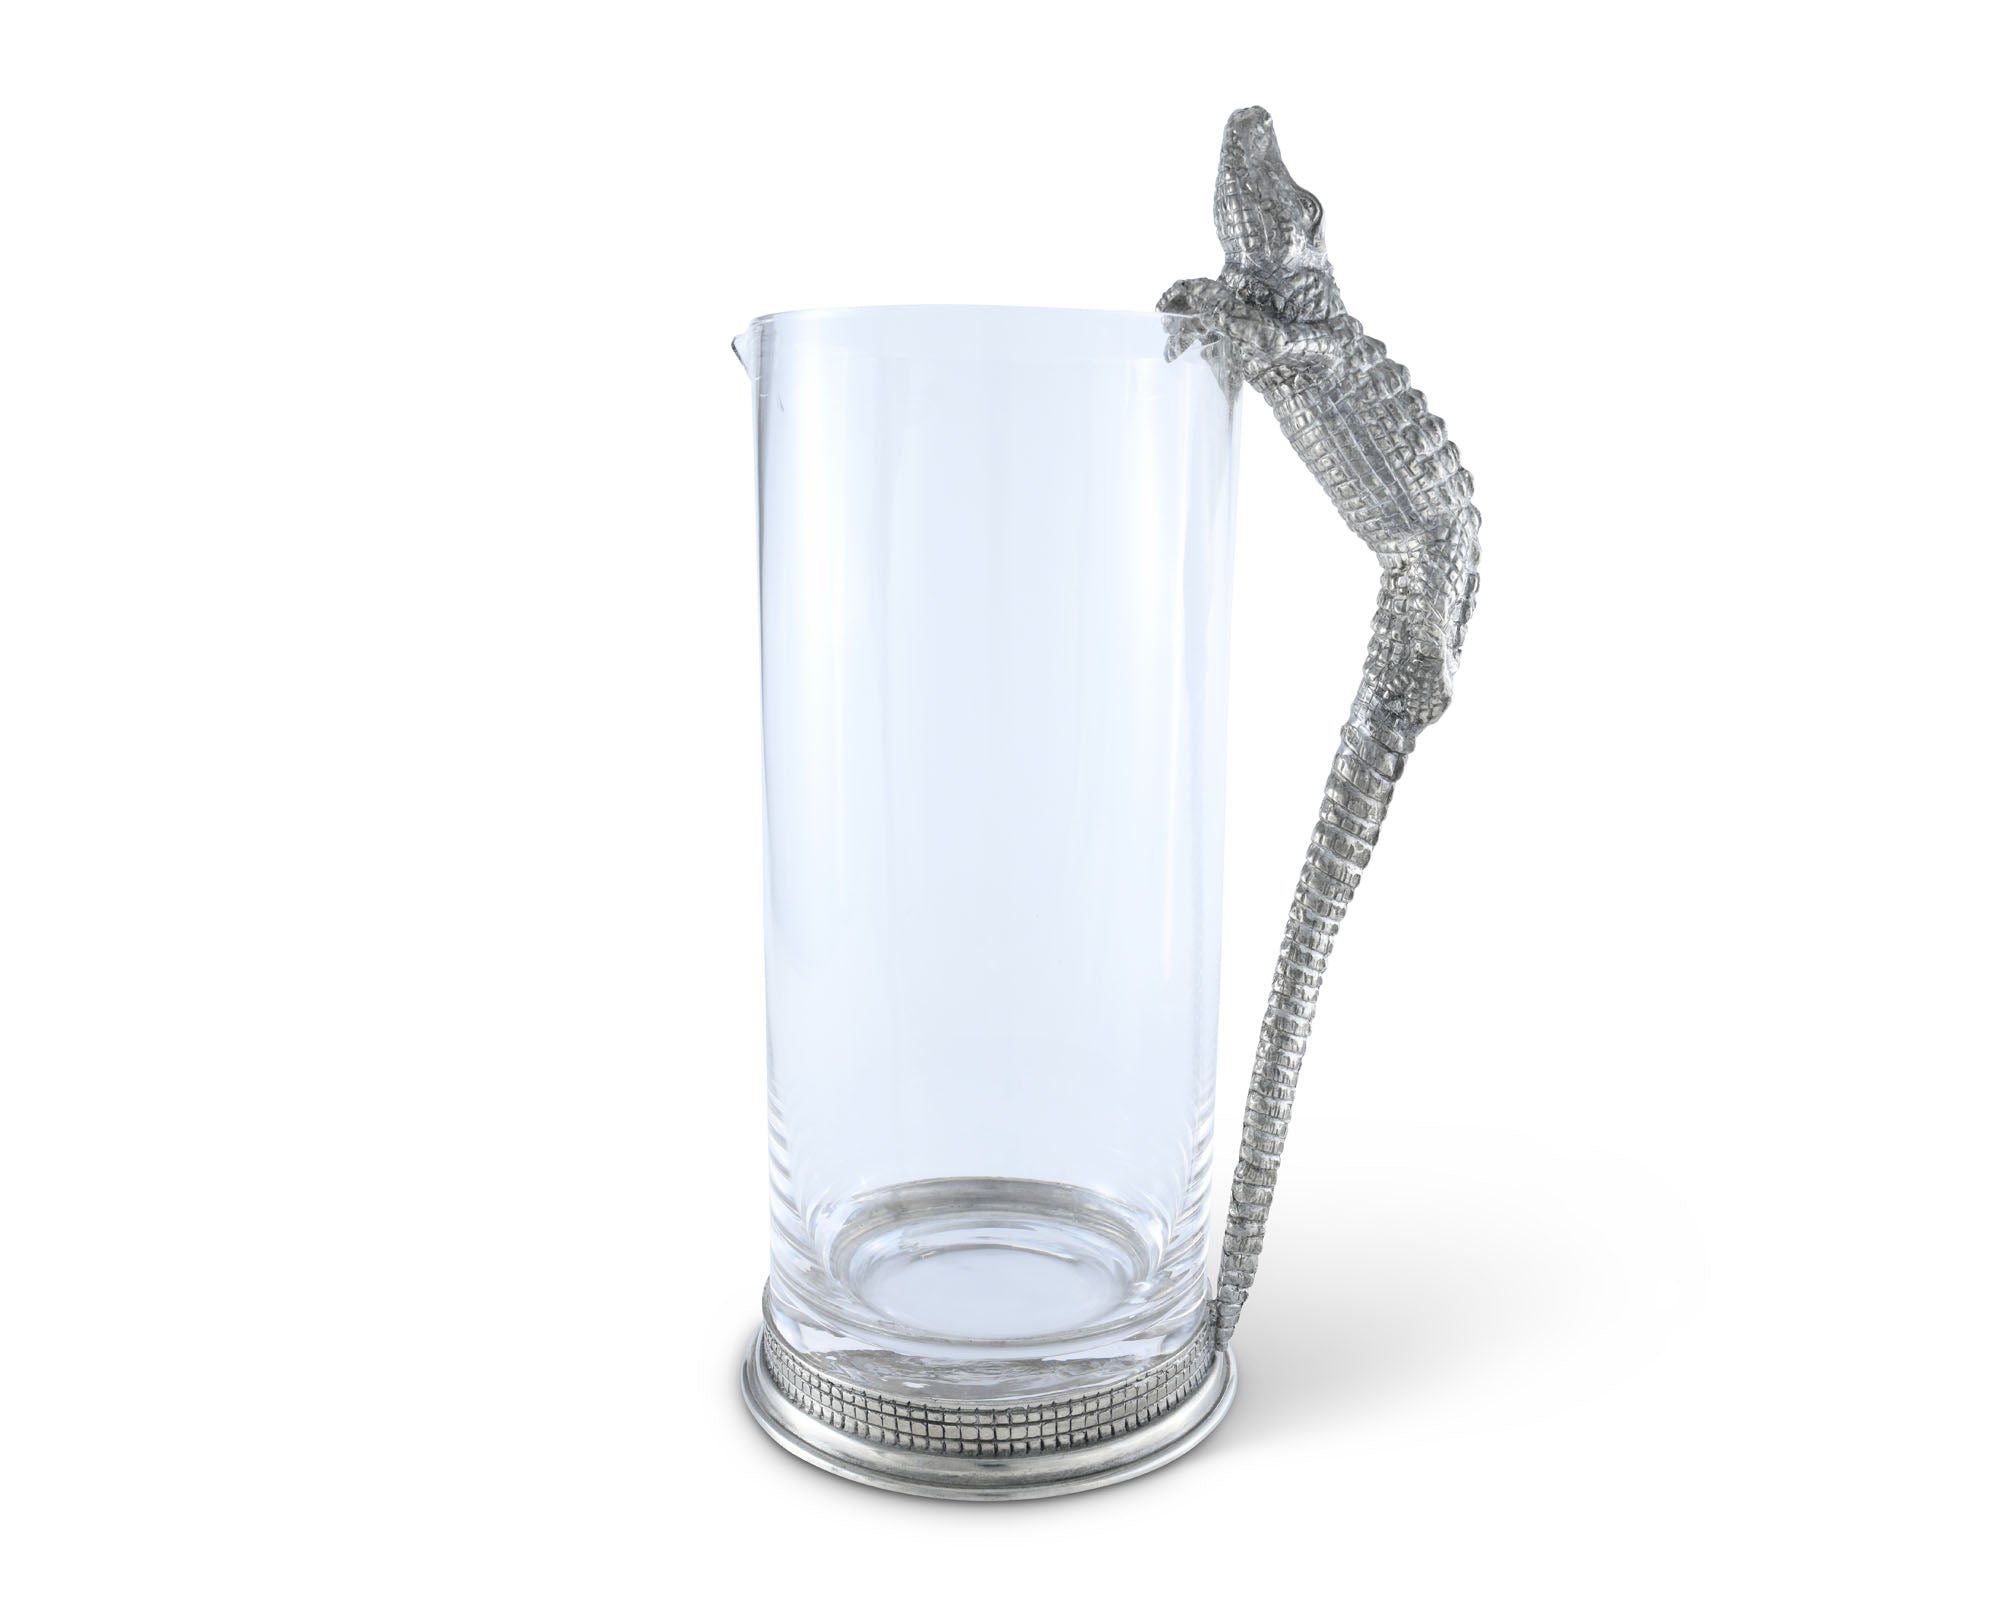 Vagabond House Glass Pitcher Pewter Alligator Handle Product Image